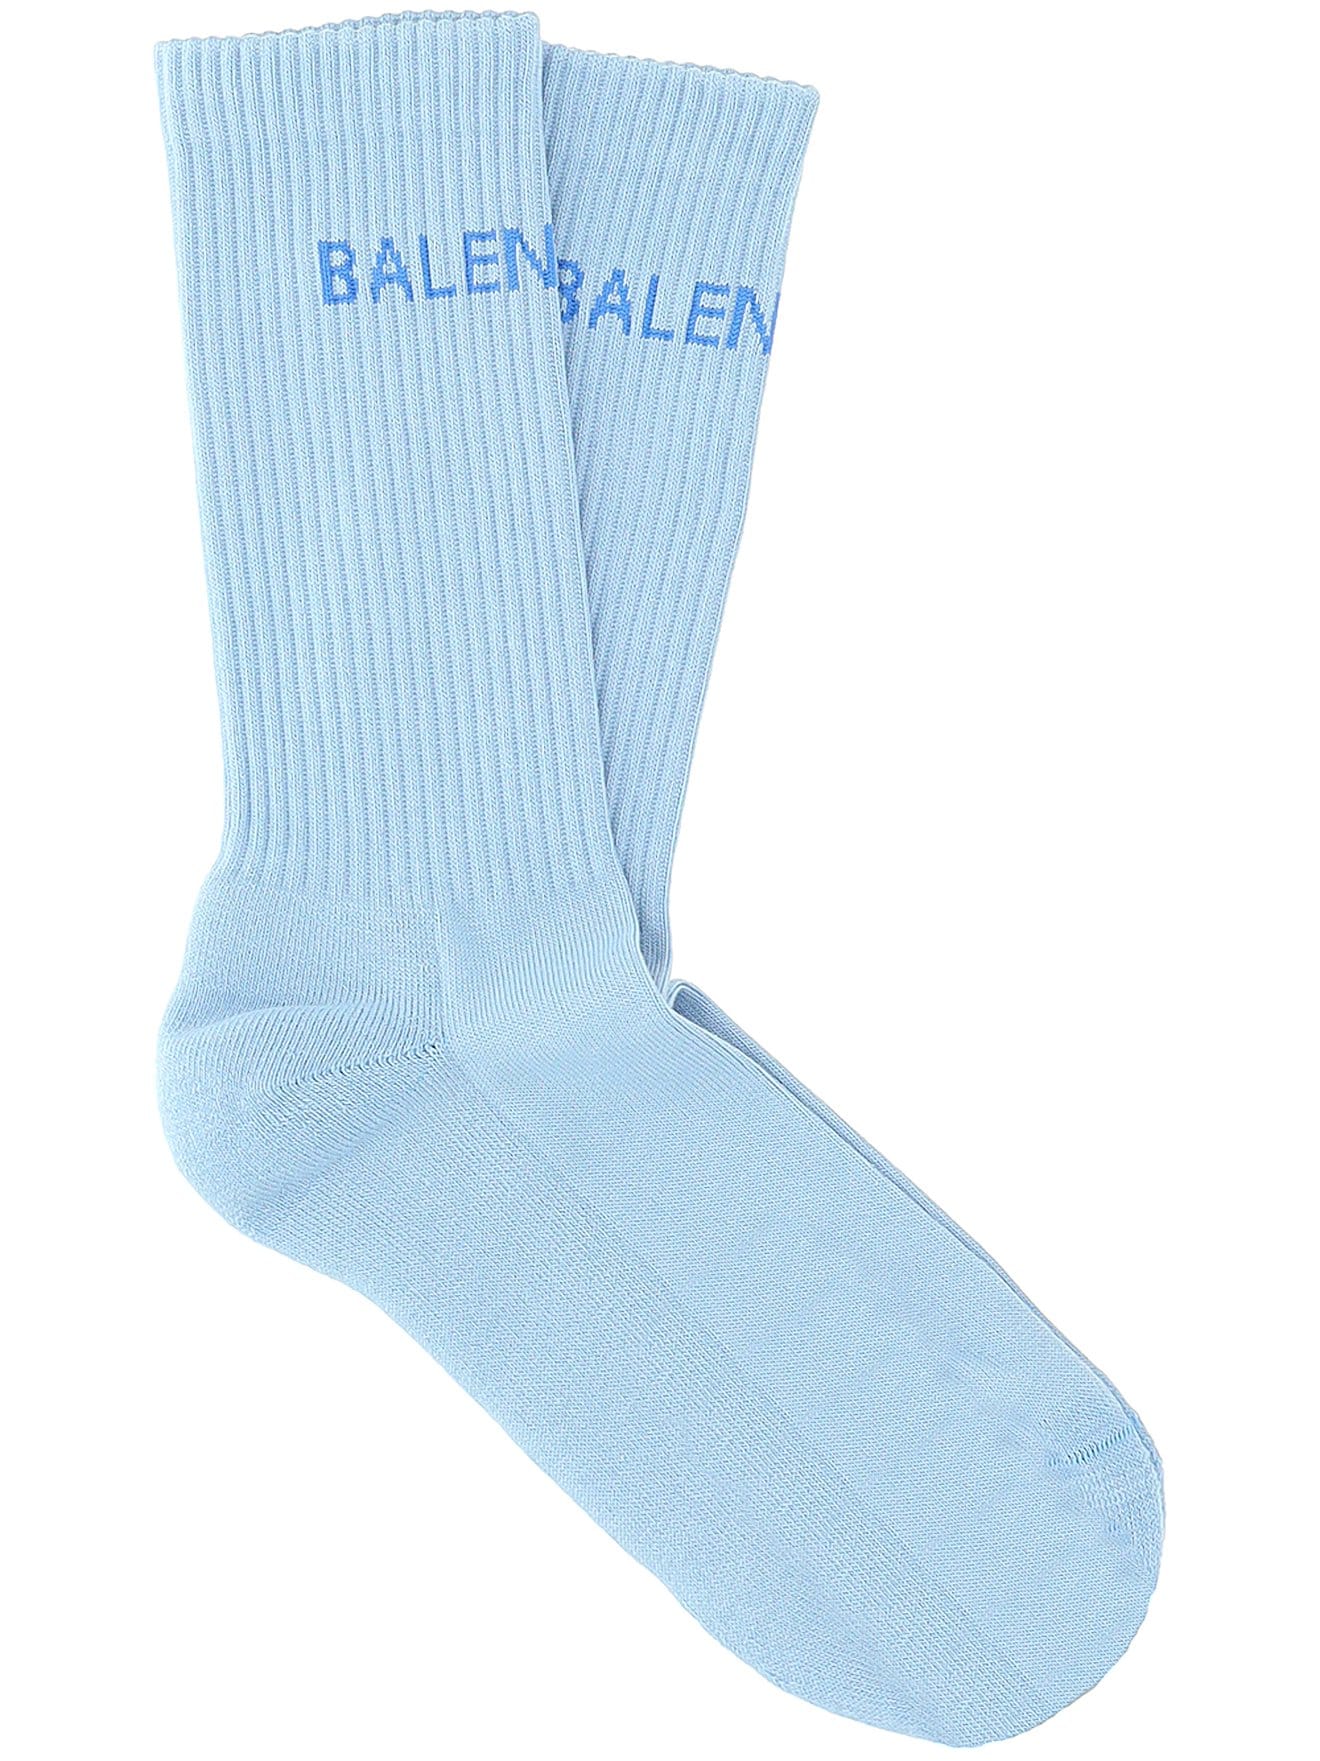 Balenciaga Printed soks blue | MODES